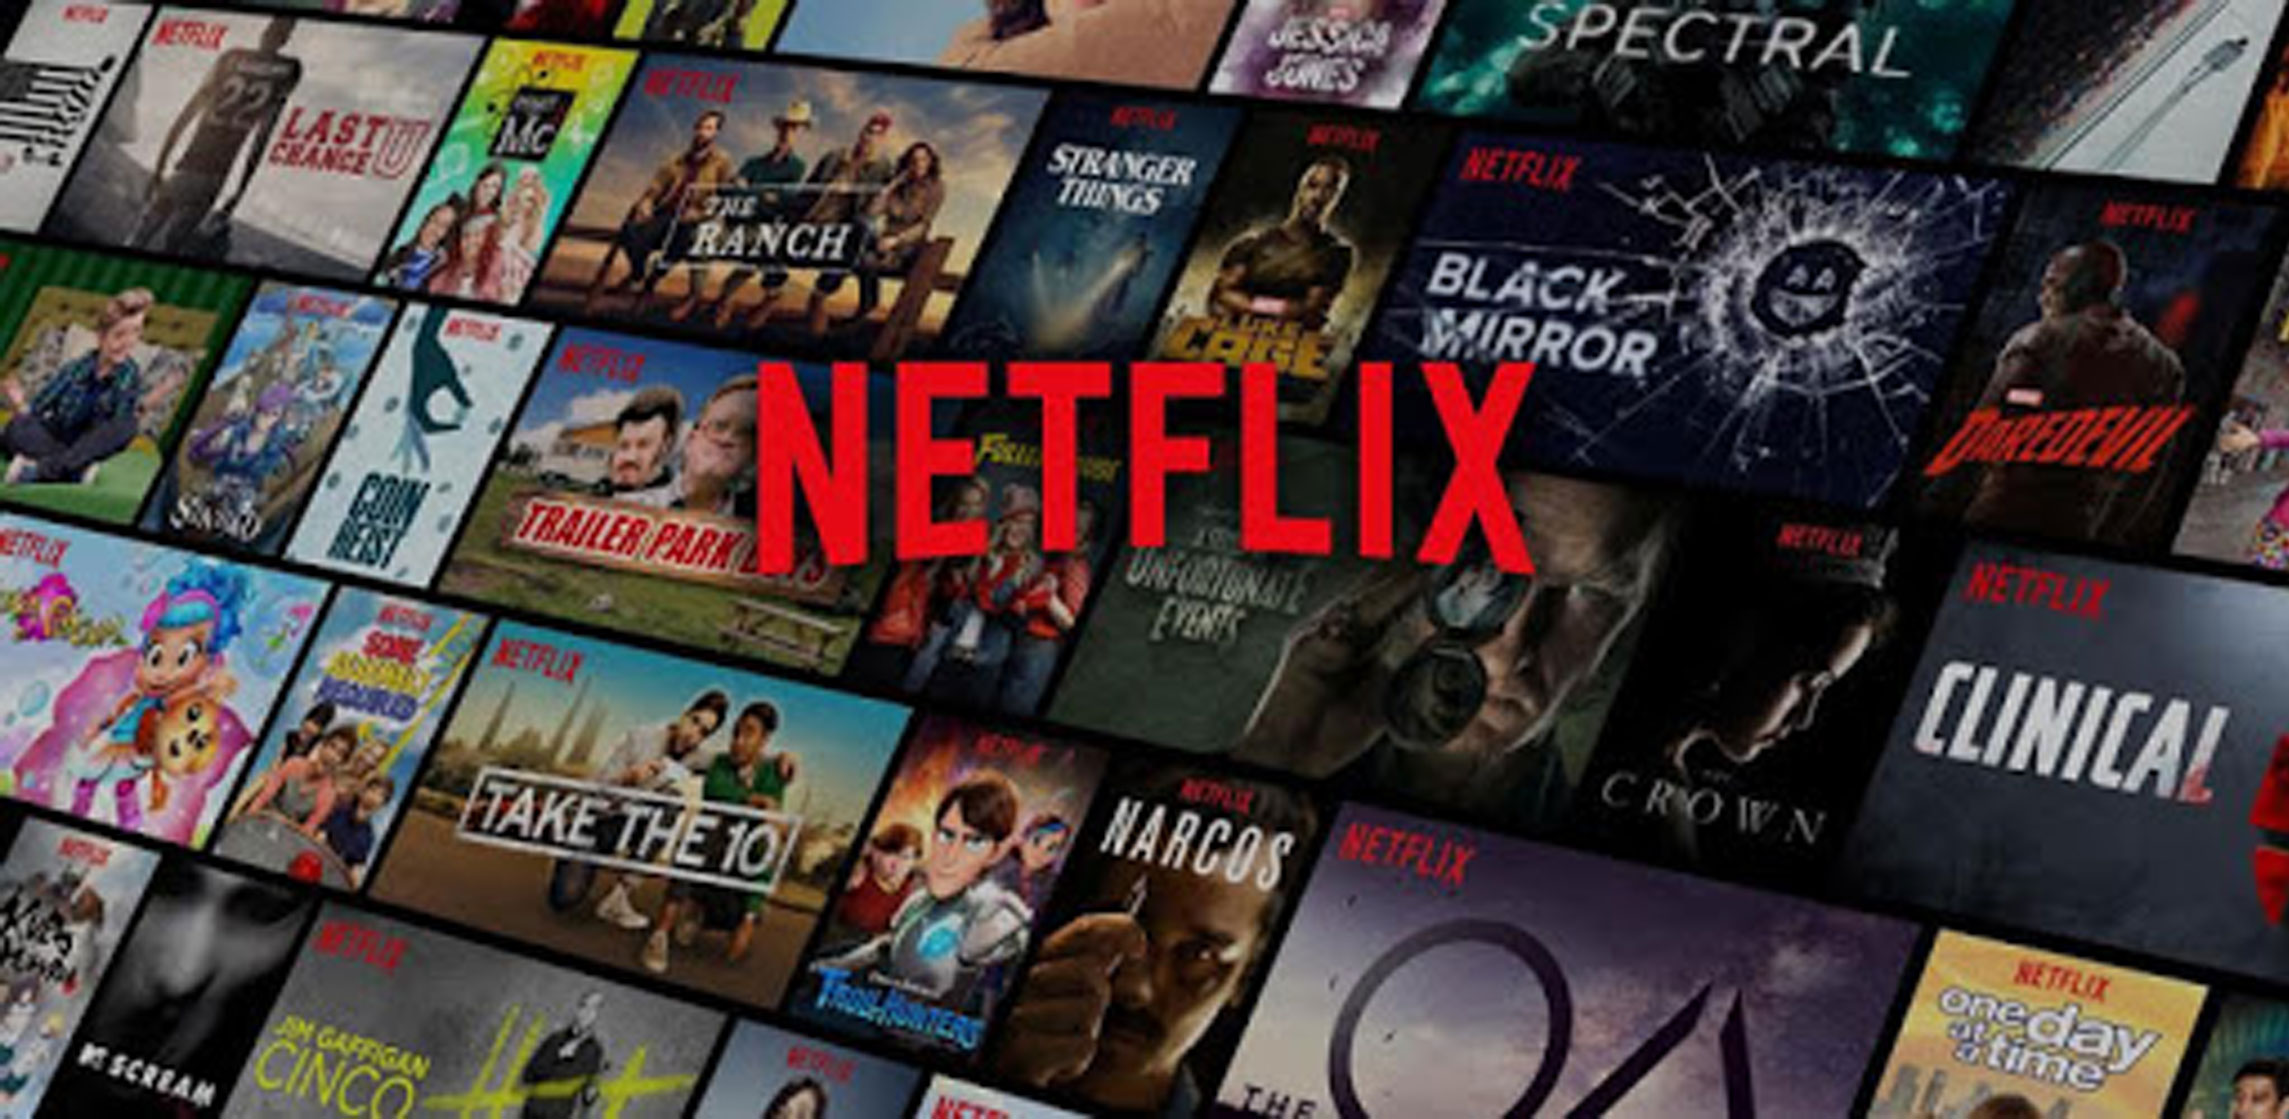 Marak Jual Beli Banting Harga Akun Netflix Tak Resmi Praktisi Siber Berisiko Akun Disuspend Tiktak Id